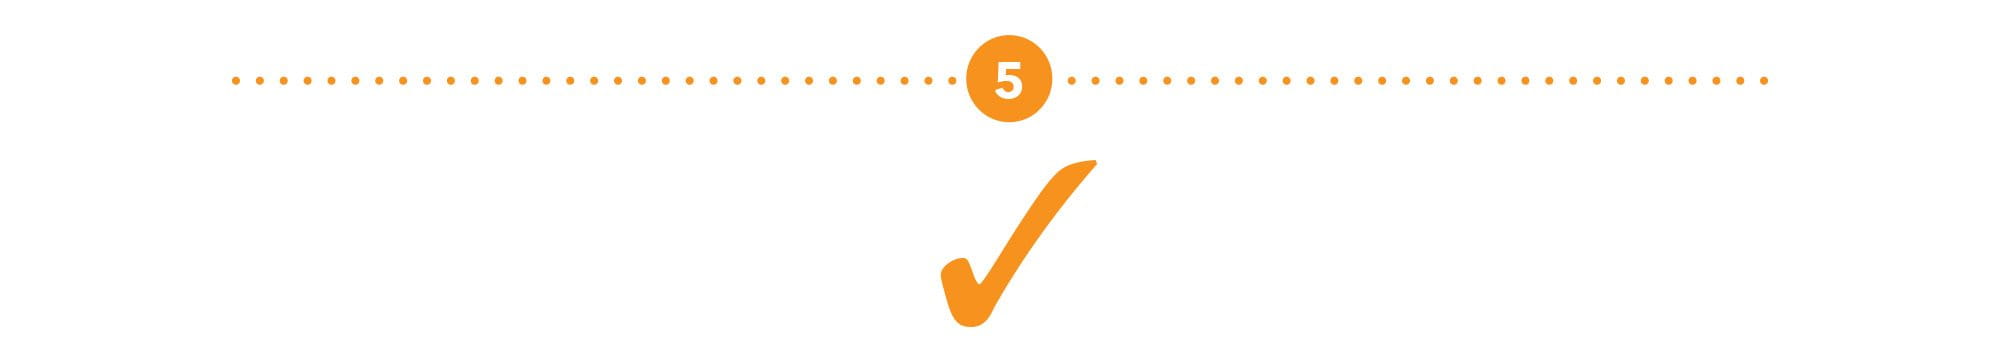 An orange checkmark icon.